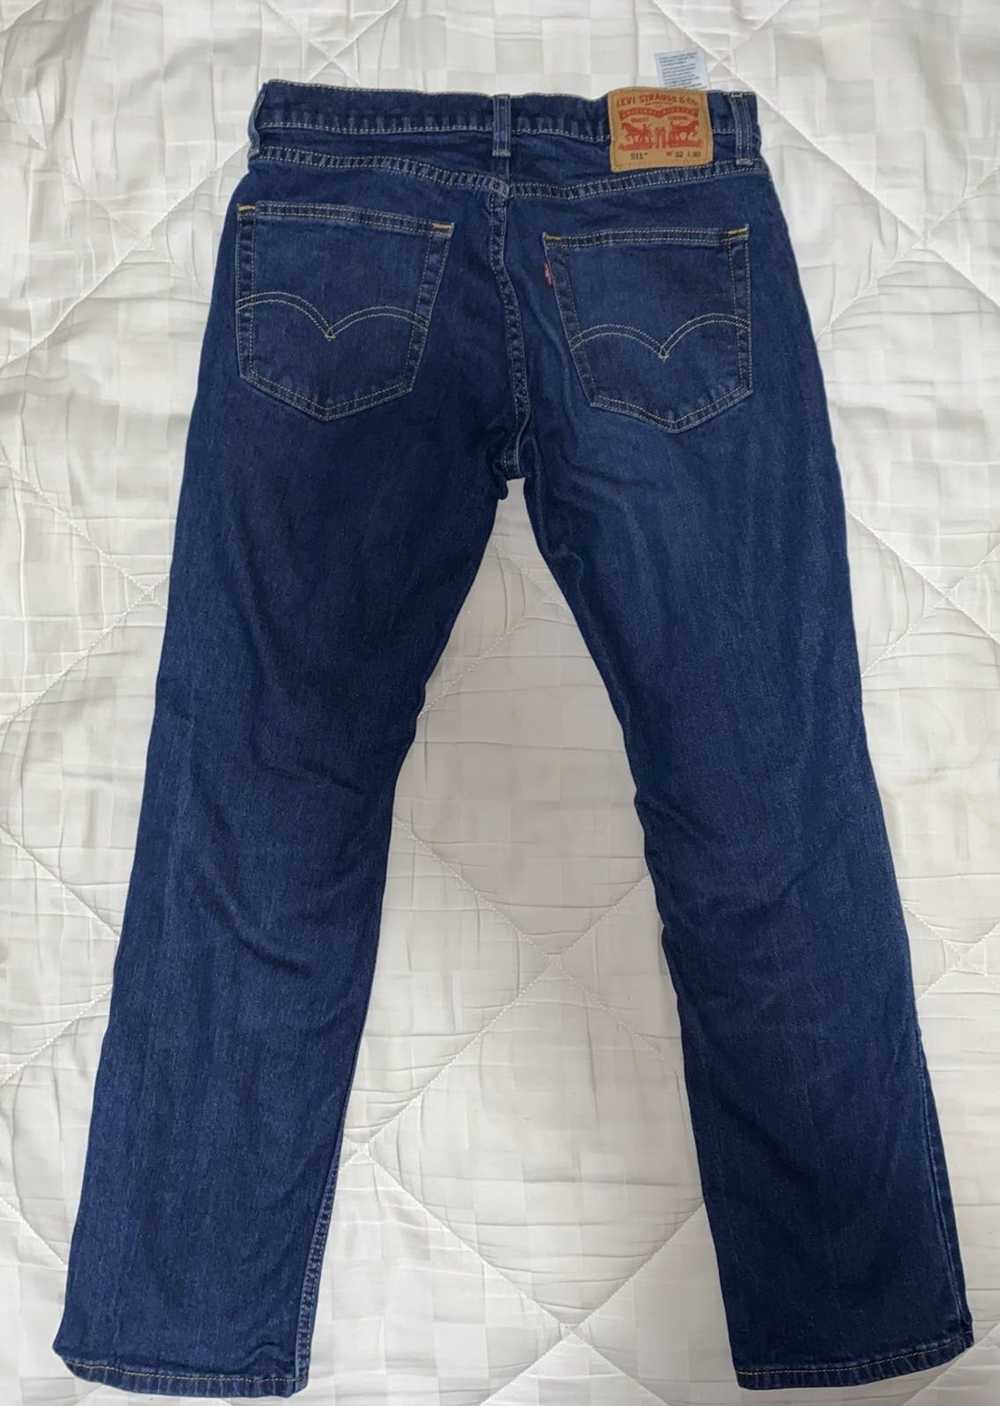 Levi's Levi’s 511 Distressed Slim Jeans - image 2